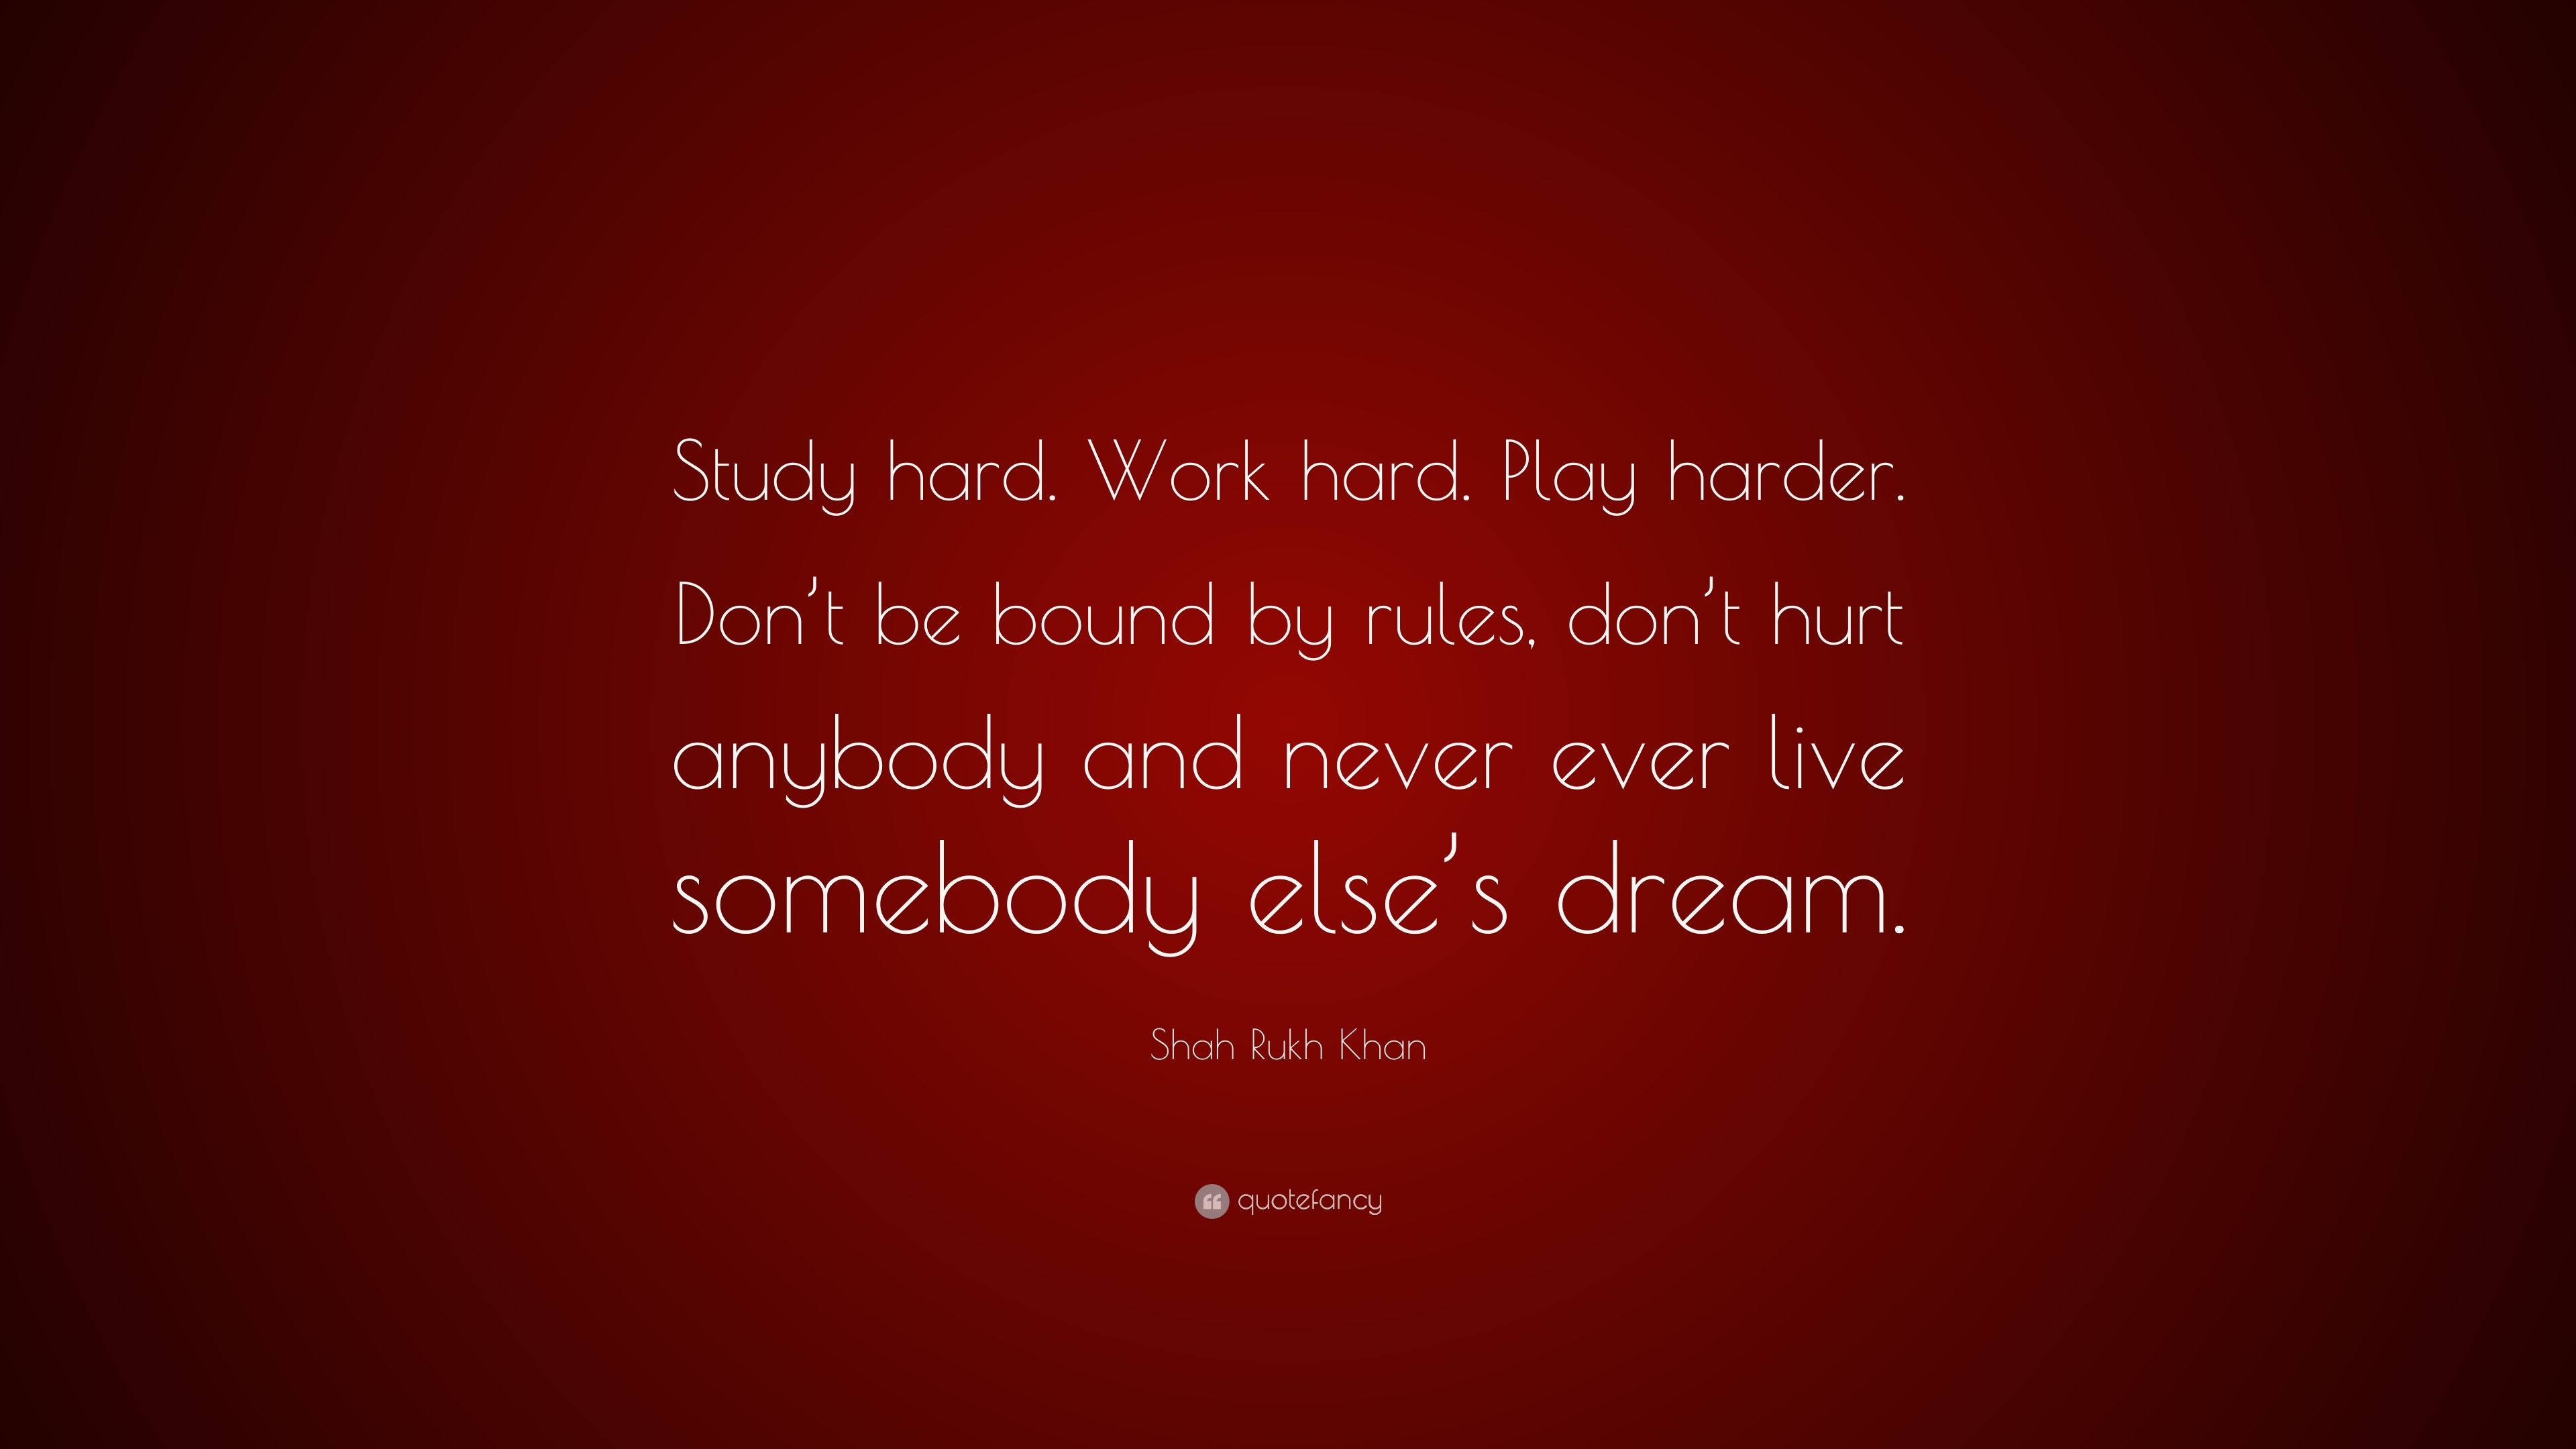 Shah Rukh Khan Quote: “Study hard. Work hard. Play harder. Don't